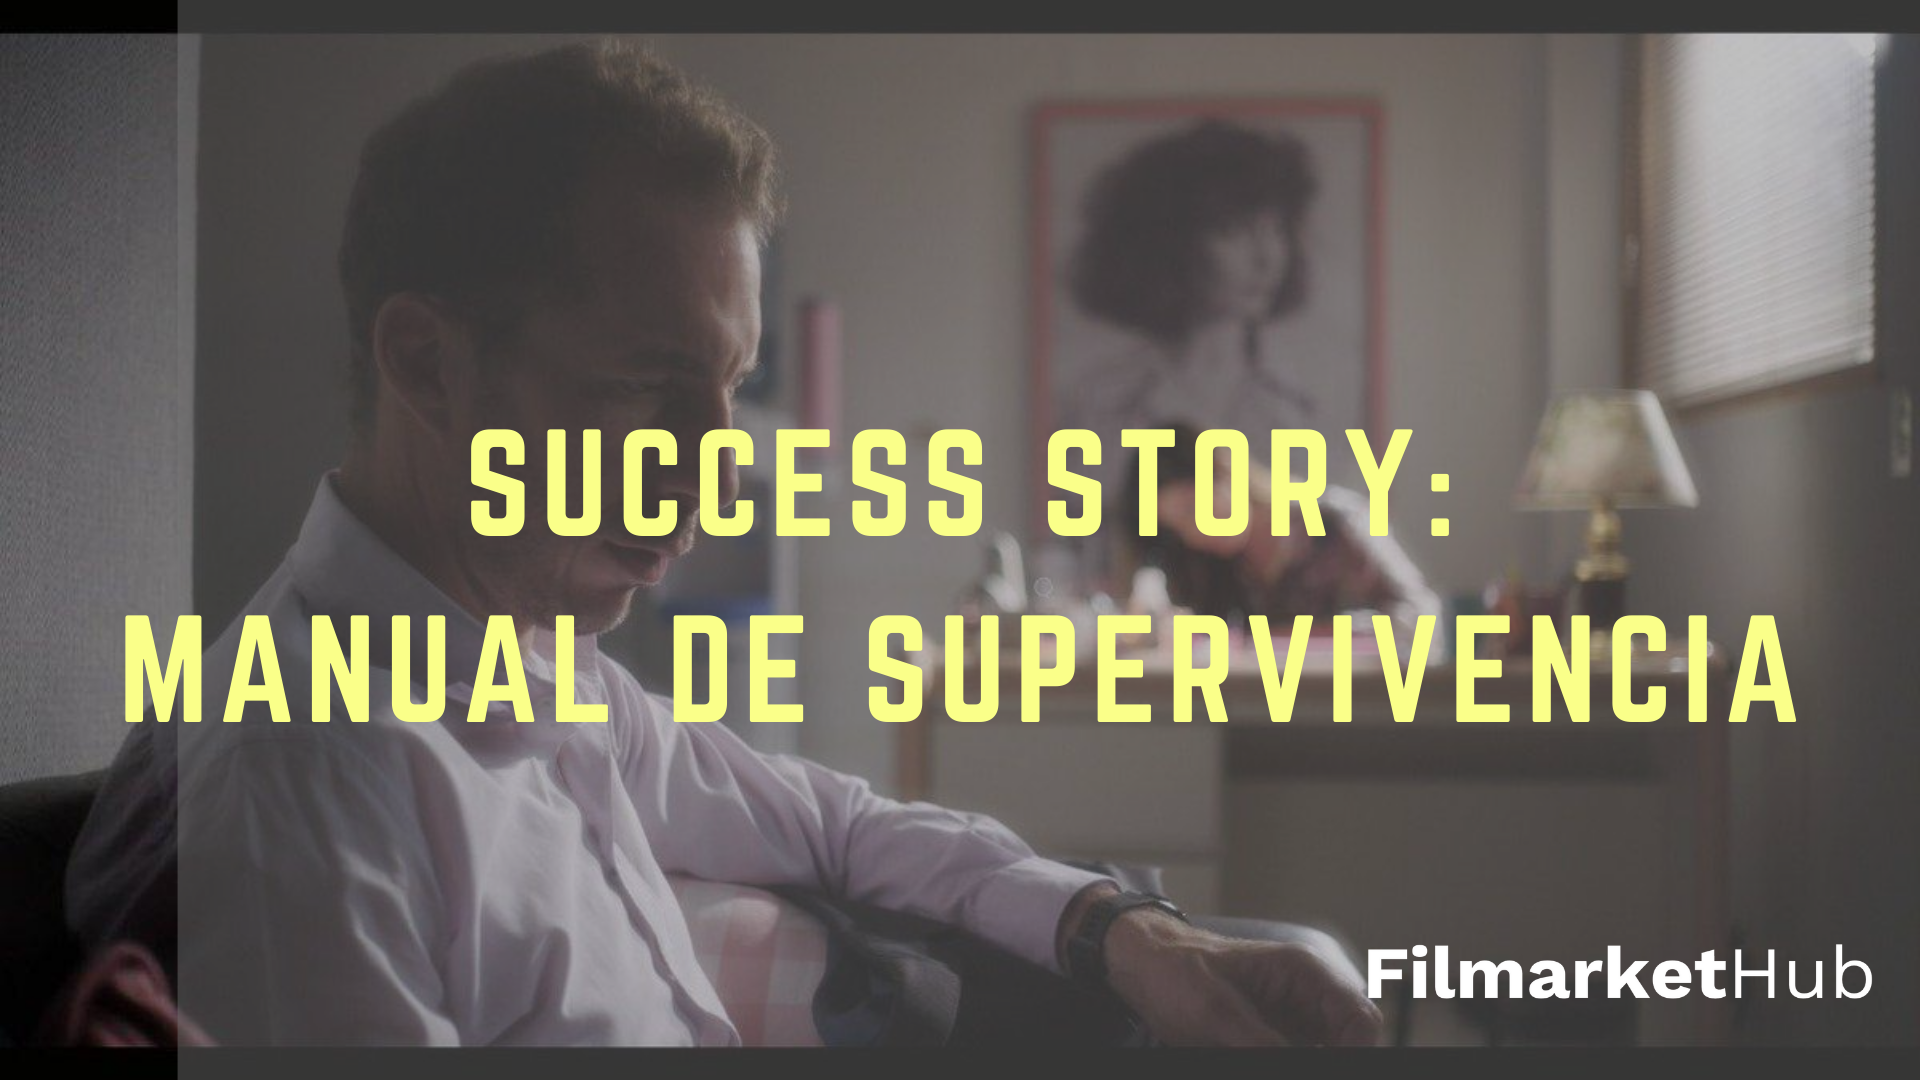 SUCCESS STORY: MANUAL DE SUPERVIVENCIA, by Filmarket Hub, Filmarket Hub